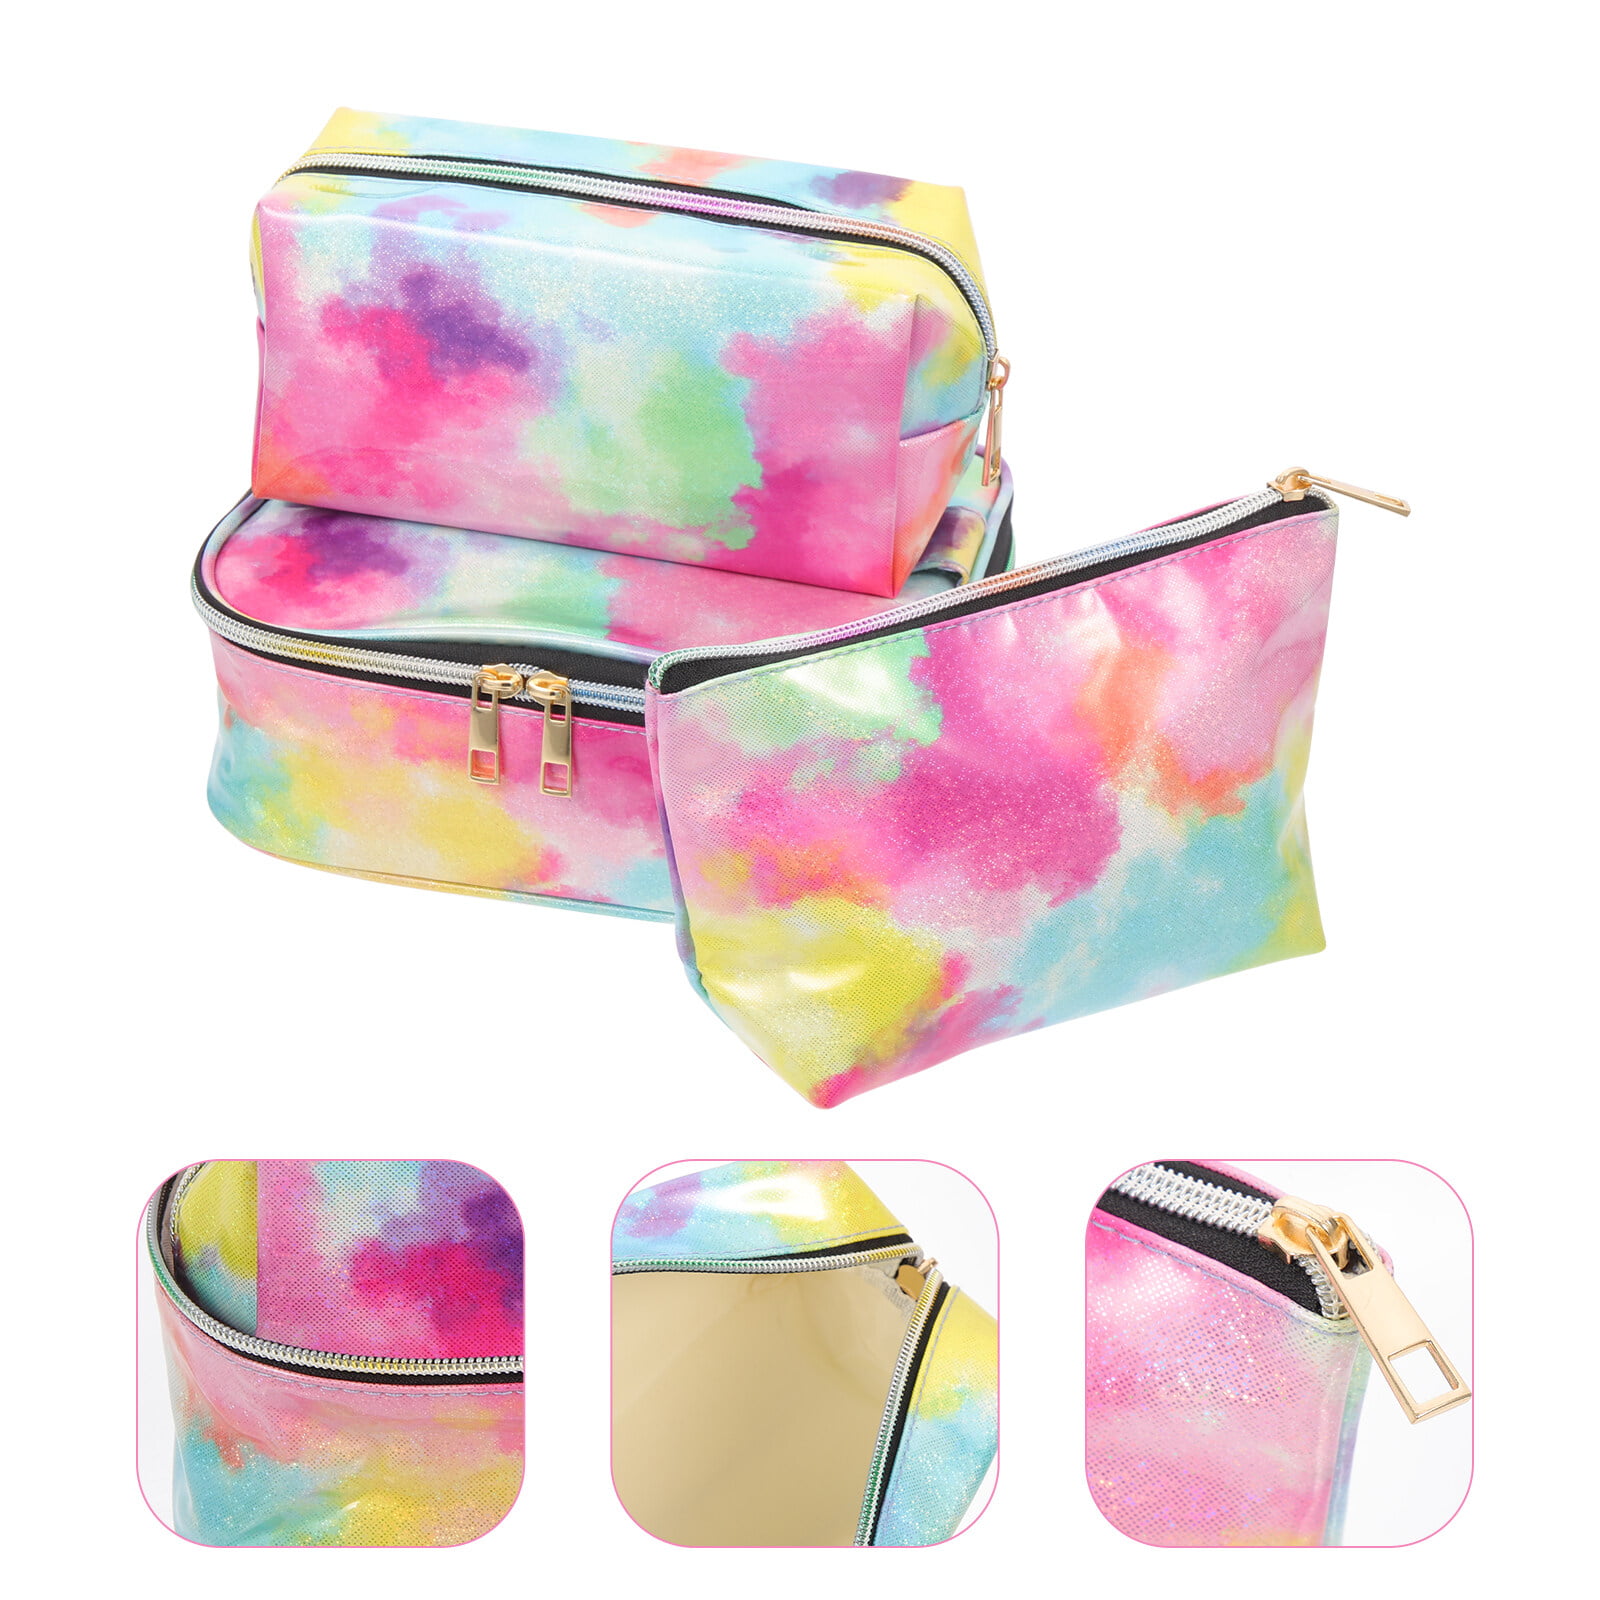 3PCS Tie-Dye Makeup Portable Travel Toiletries Toiletry Set Bag Handle Pouch Bag Cosmetic Bags